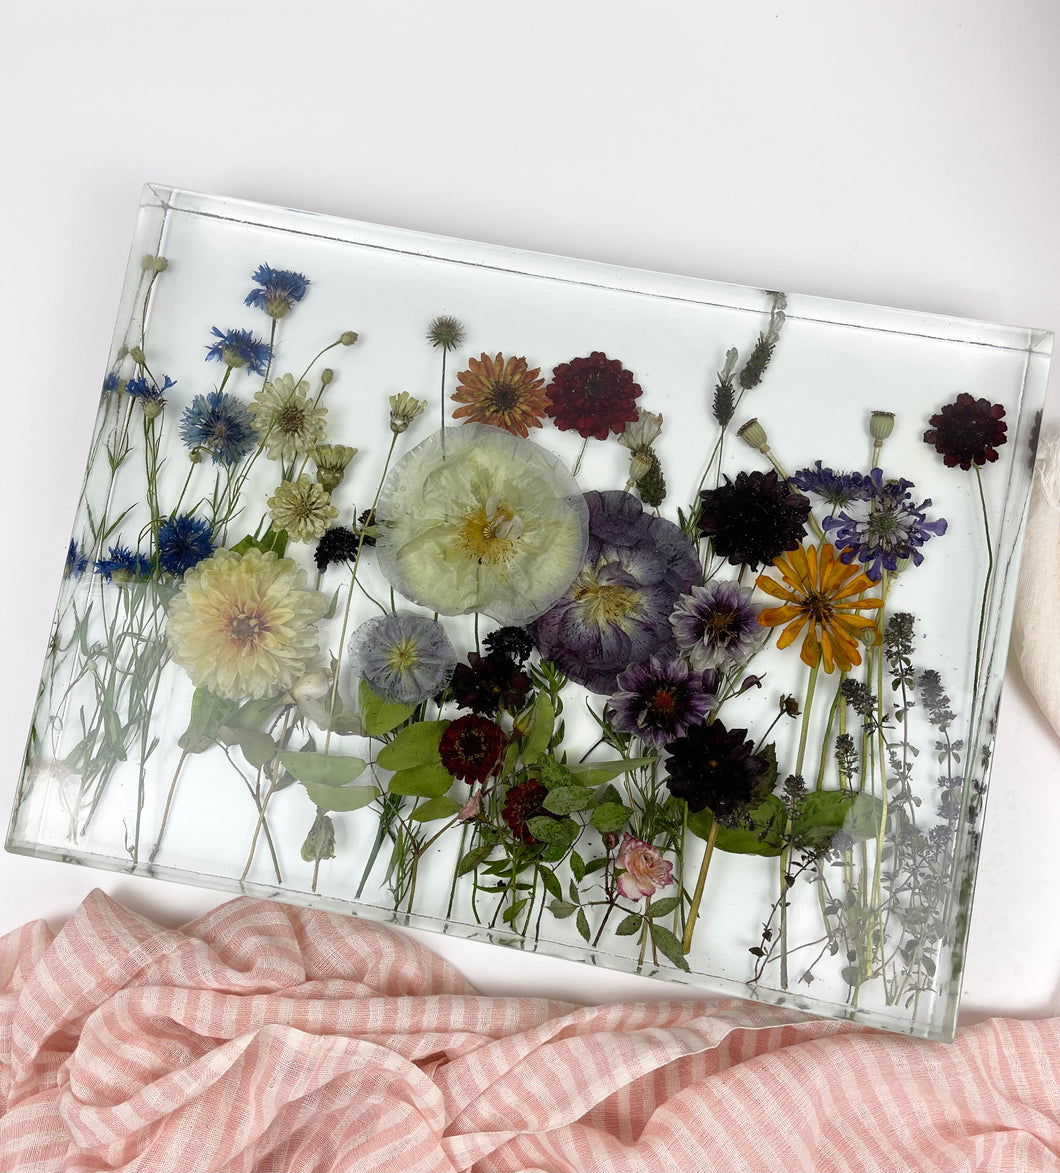 390x290mm resin block - Summer blooms